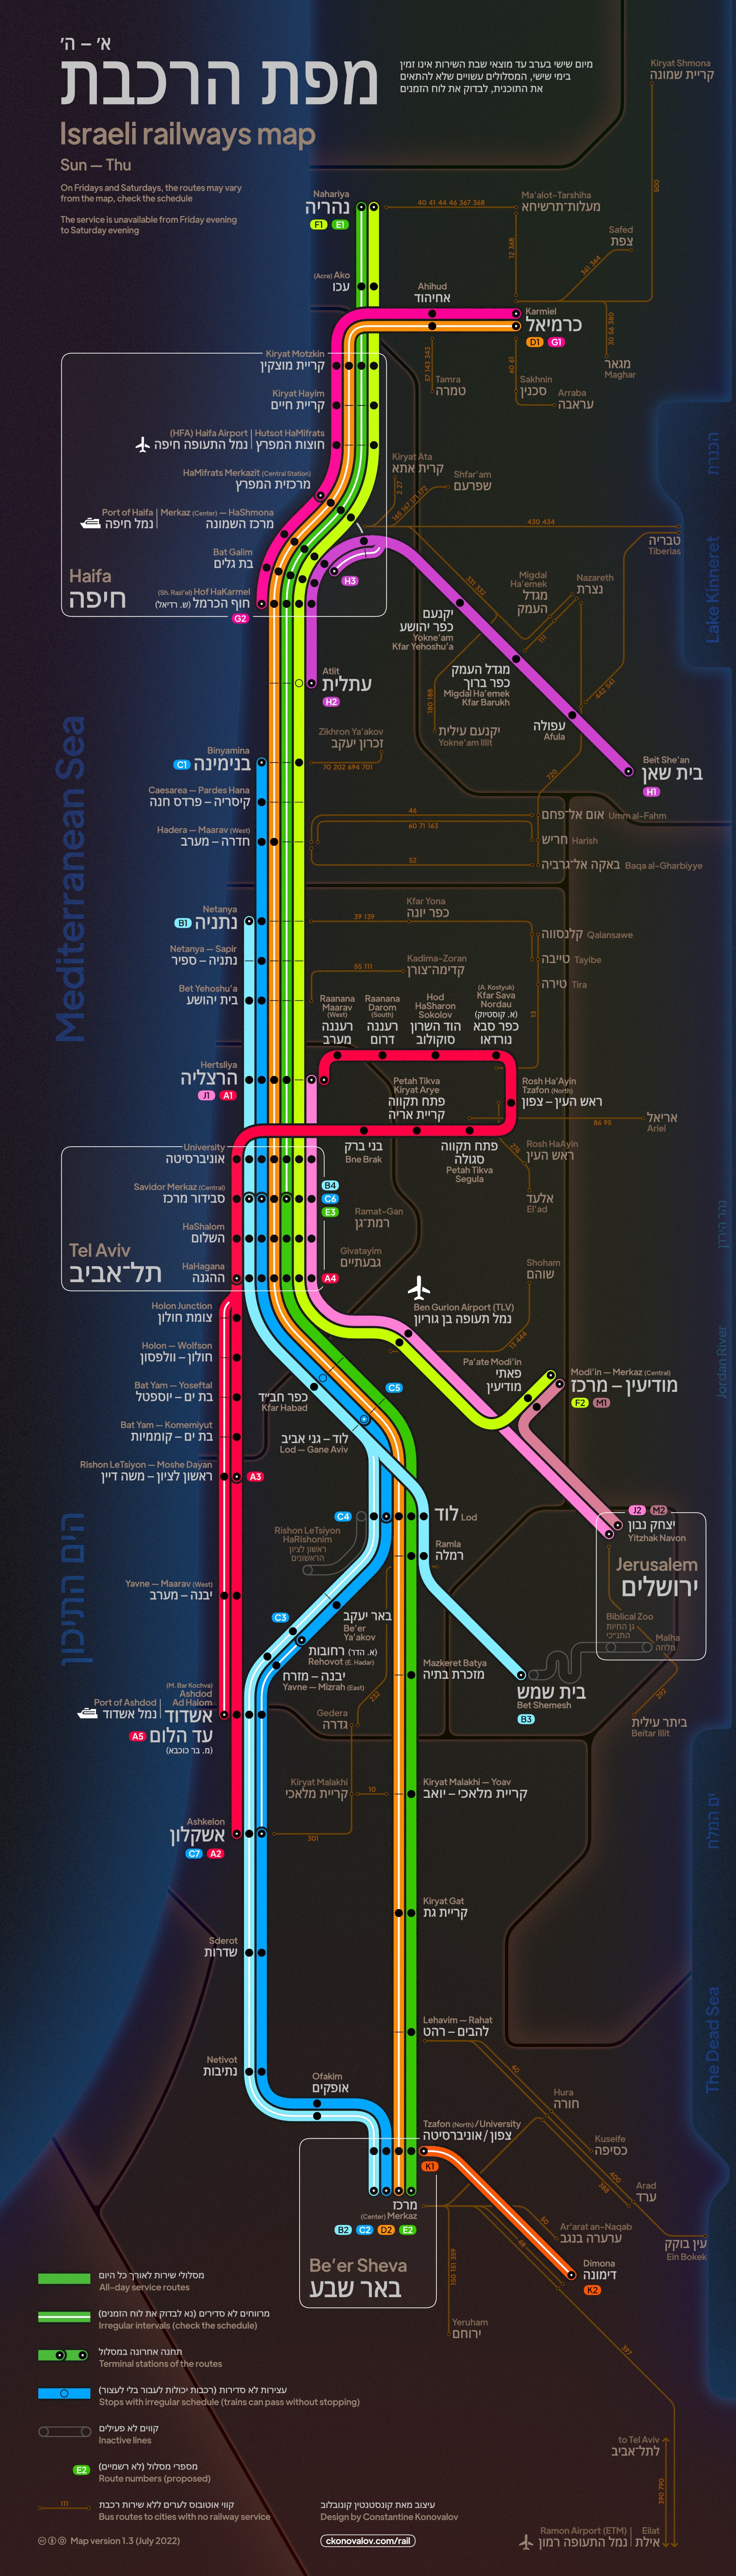 Israel_map_1.3